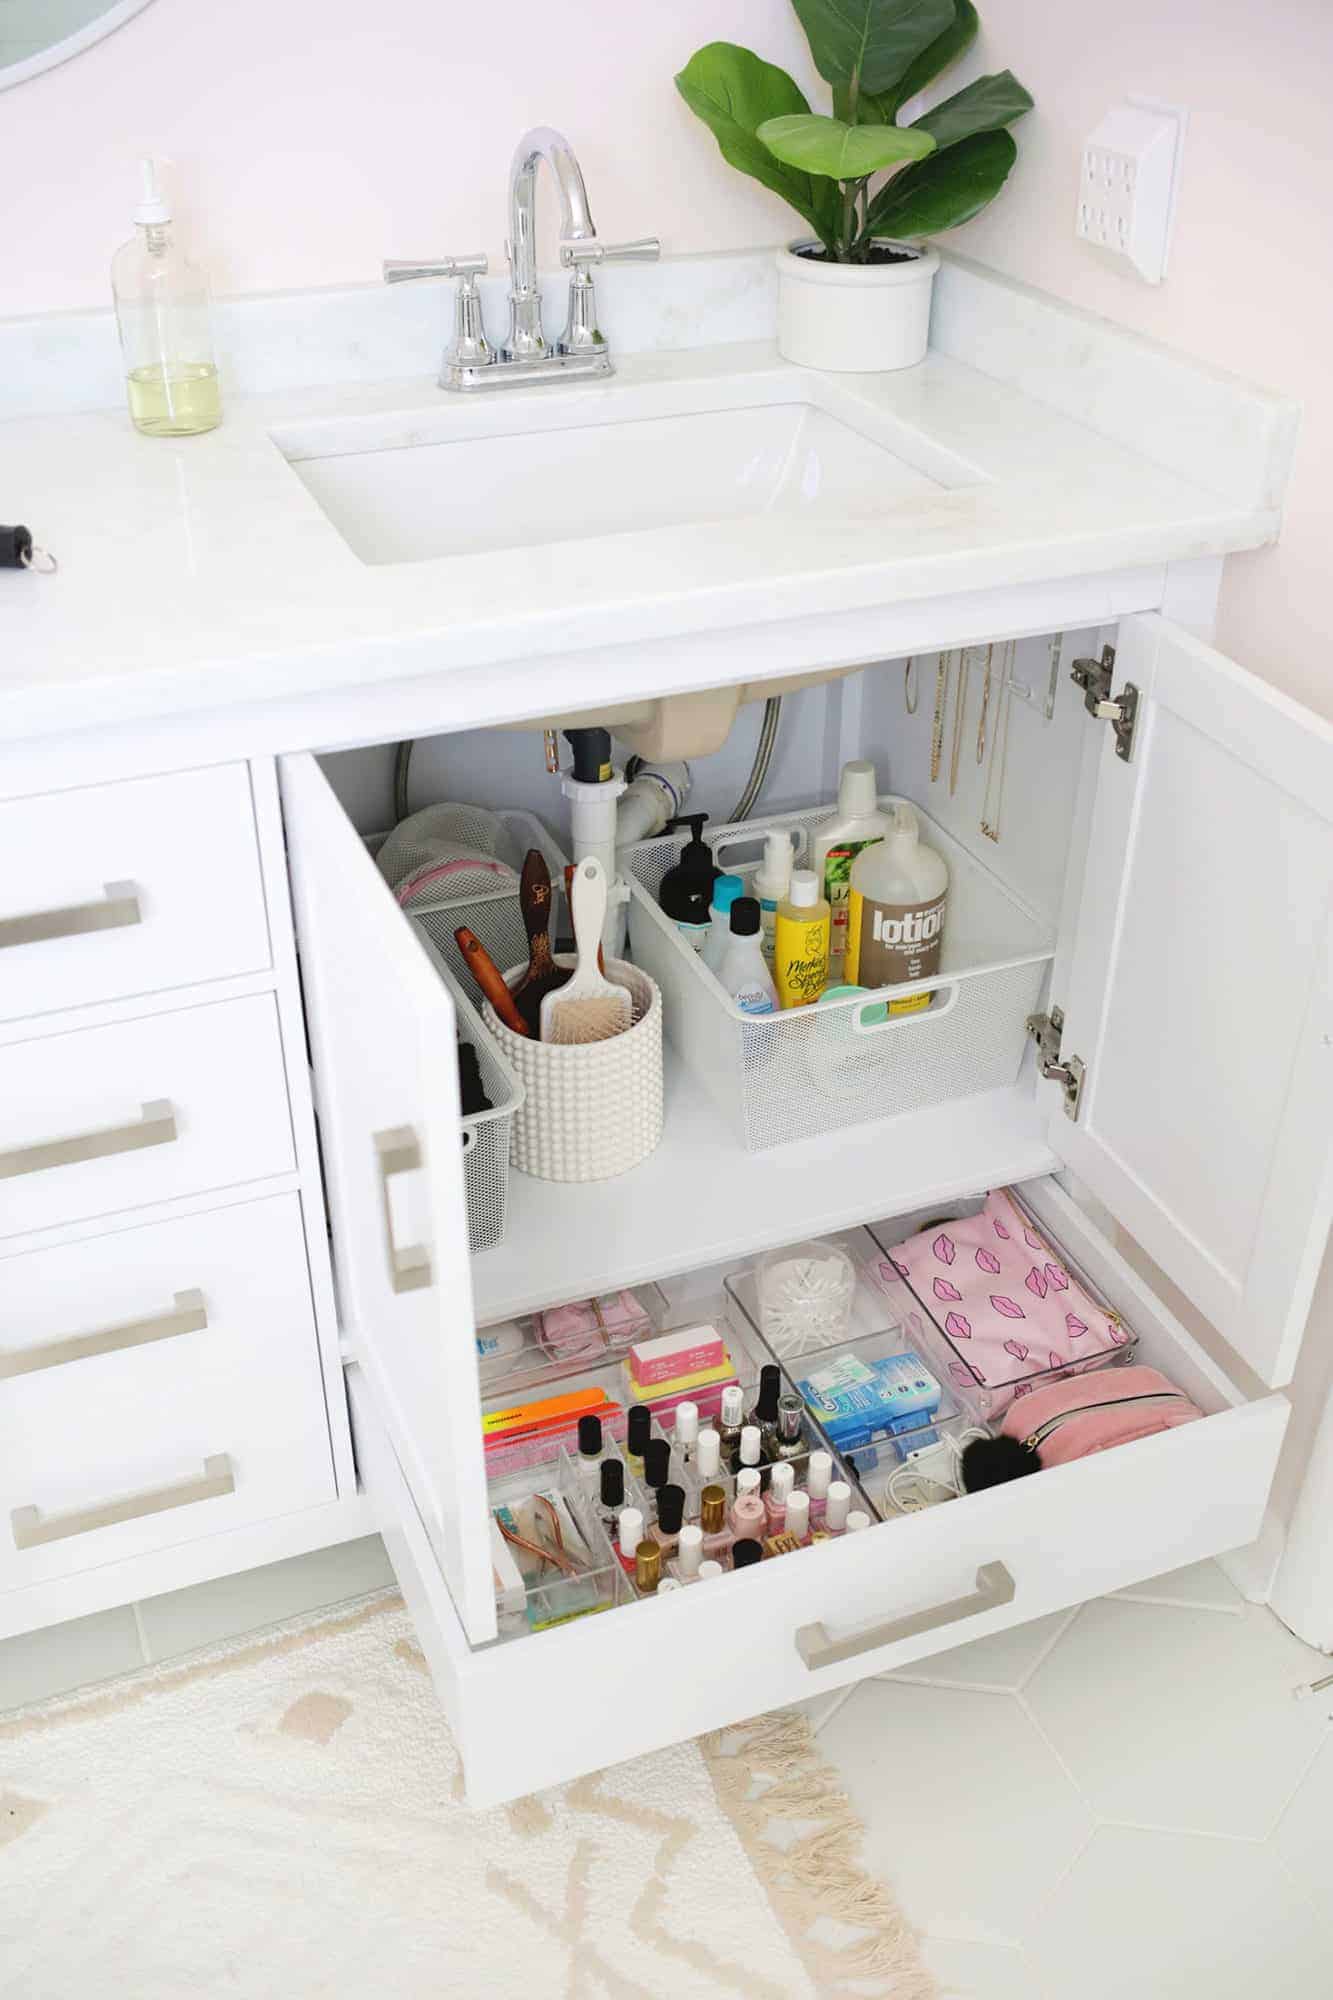 Organized Home: Easy Tips for Corralling Bathroom Clutter - Sinkology